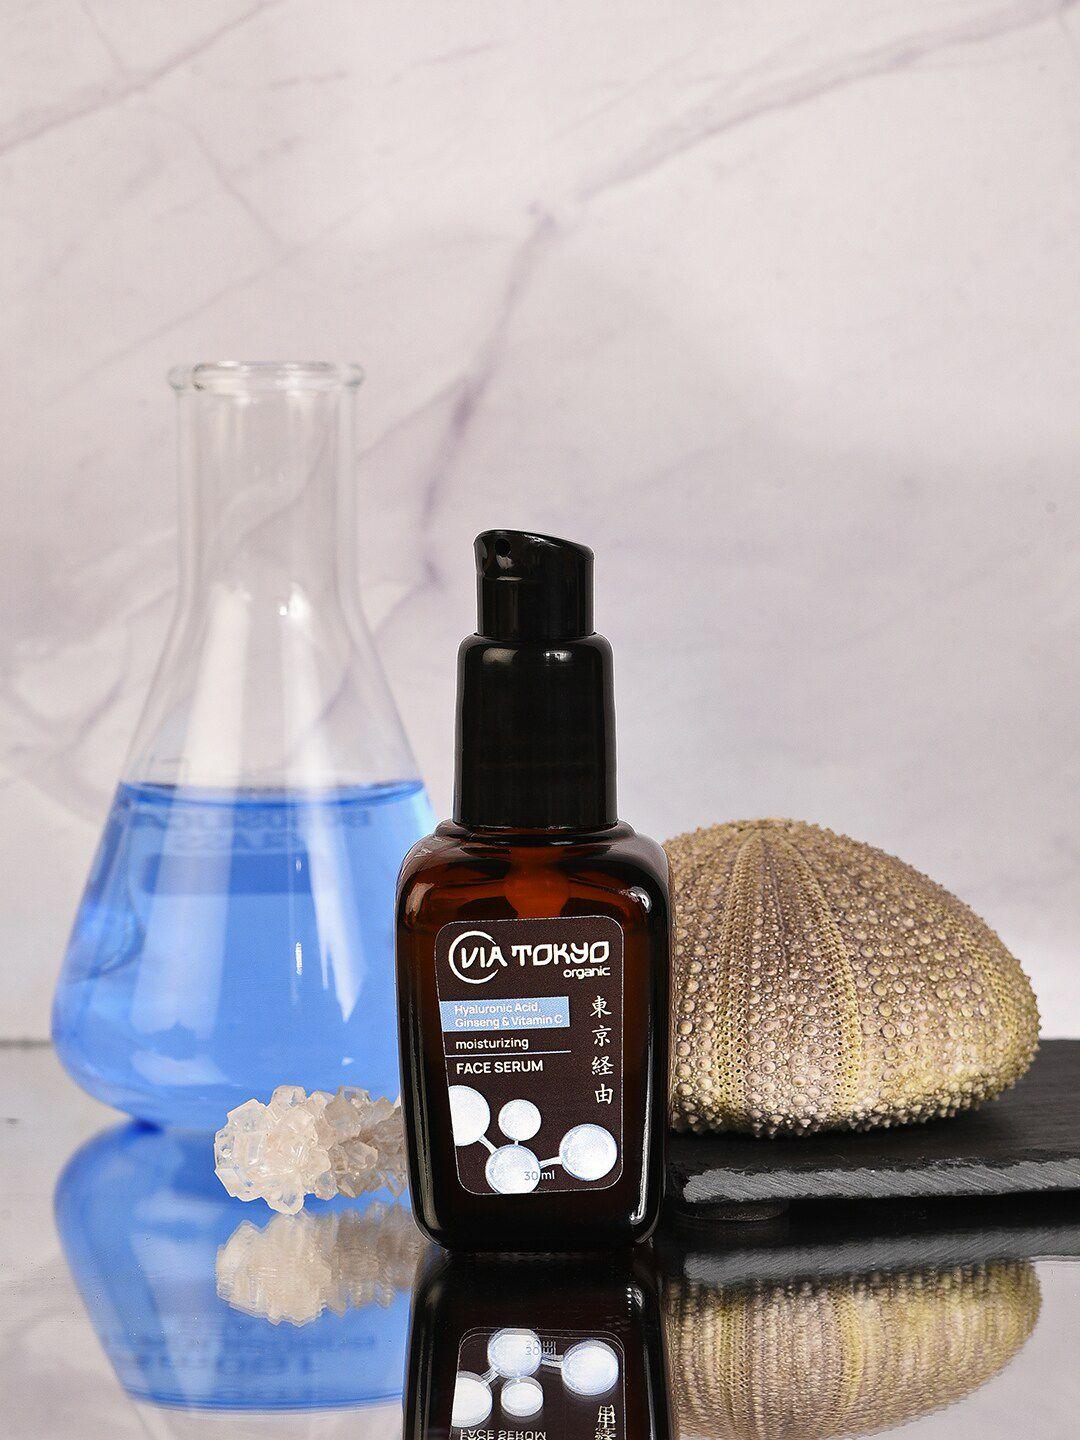 via tokyo organic hyaluronic acid ginseng & vitamin c moisturizing face serum 30 ml